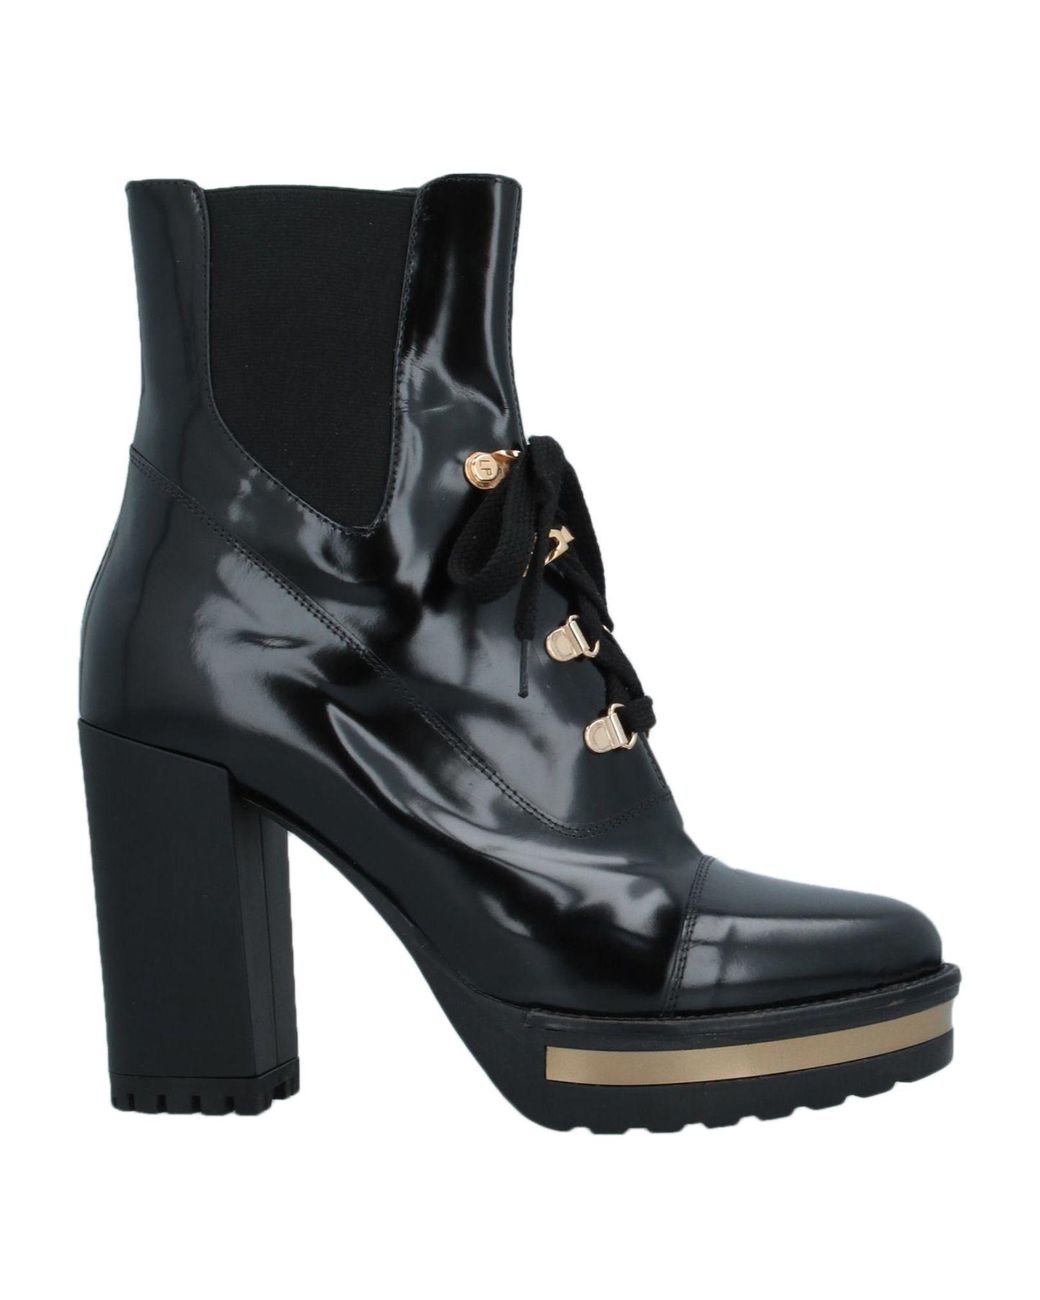 Loretta Pettinari Leather Ankle Boots in Black - Lyst